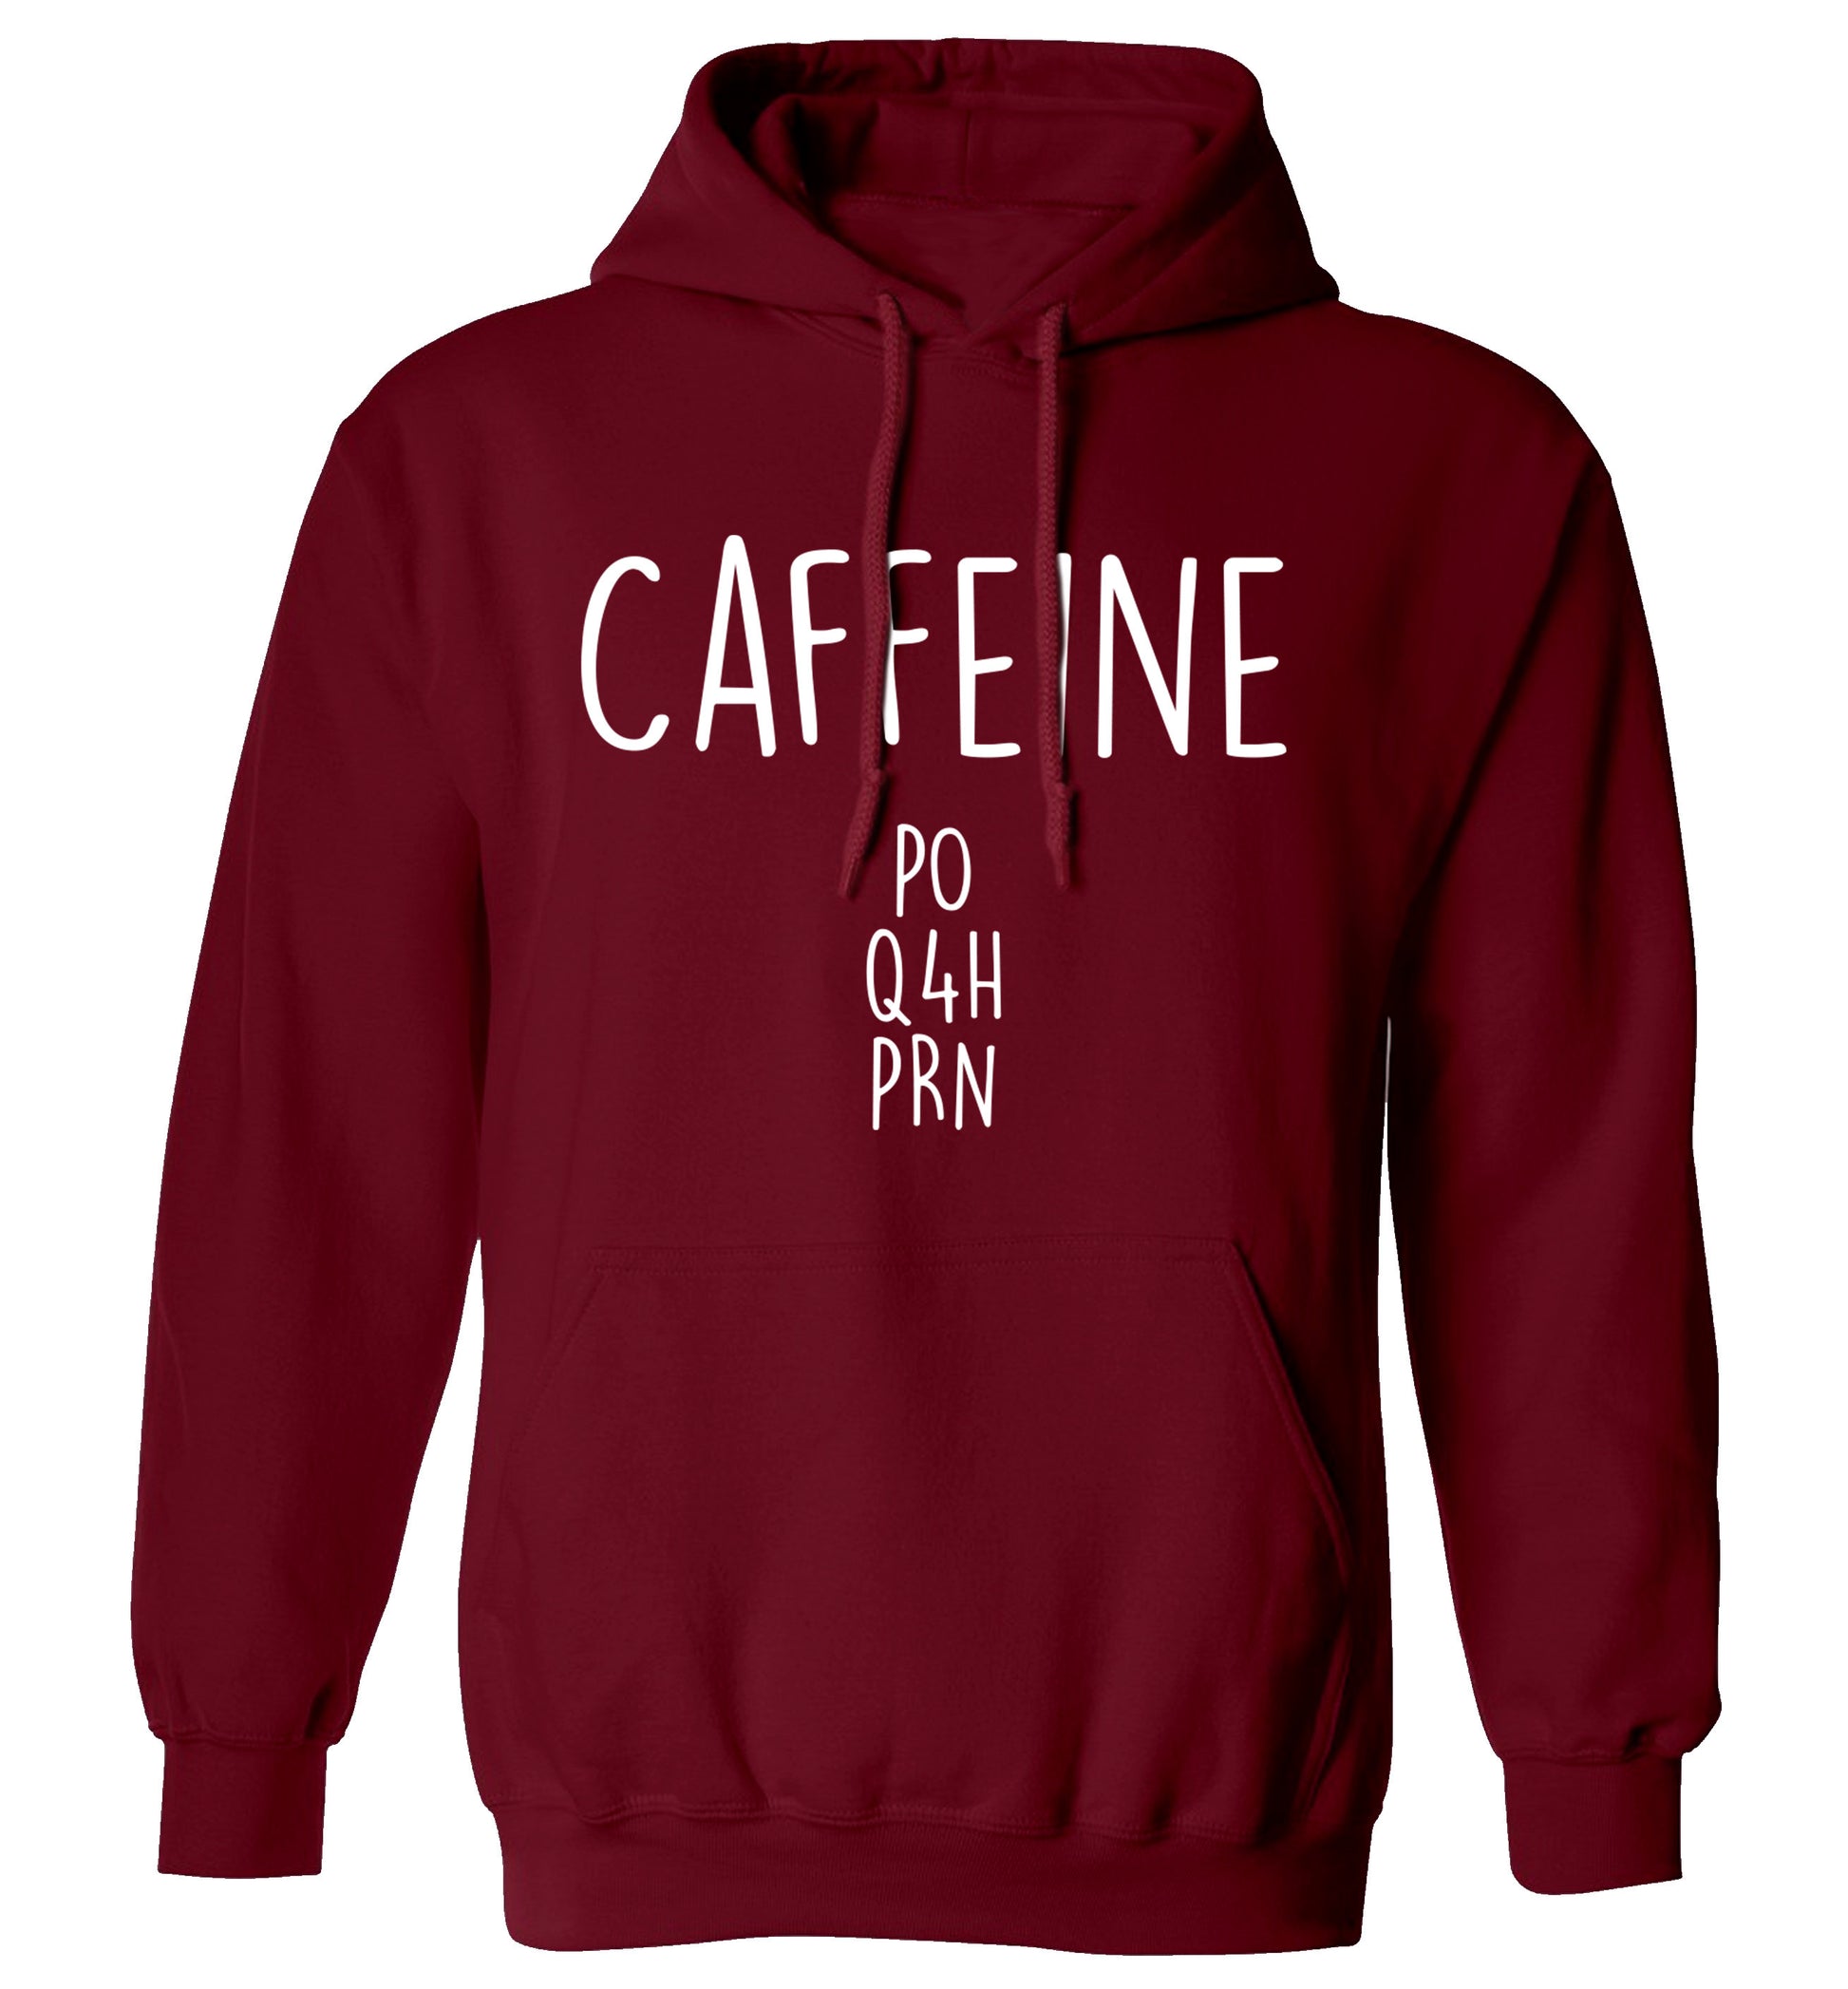 Caffeine PO Q4H PRN adults unisex maroon hoodie 2XL